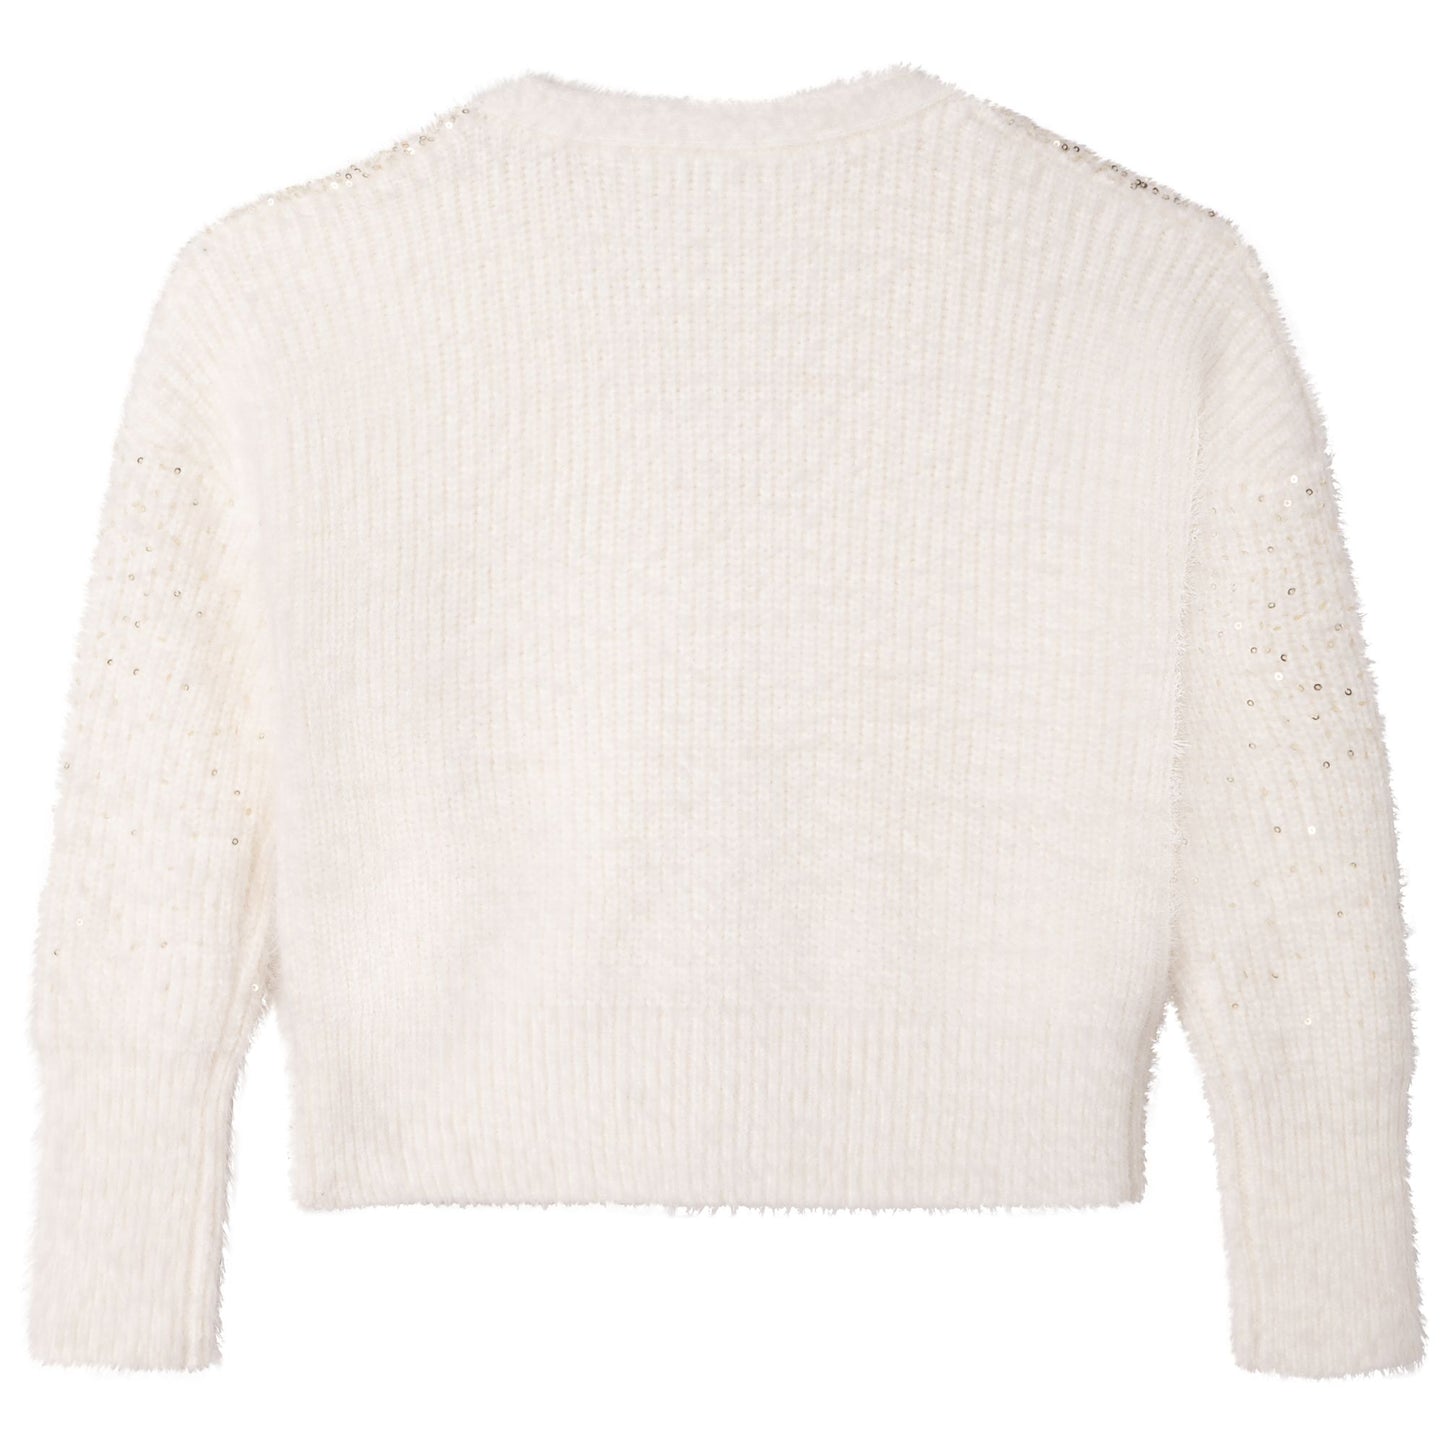 Michael Kors Knit Sequin Cardigan _Cream R15150-148